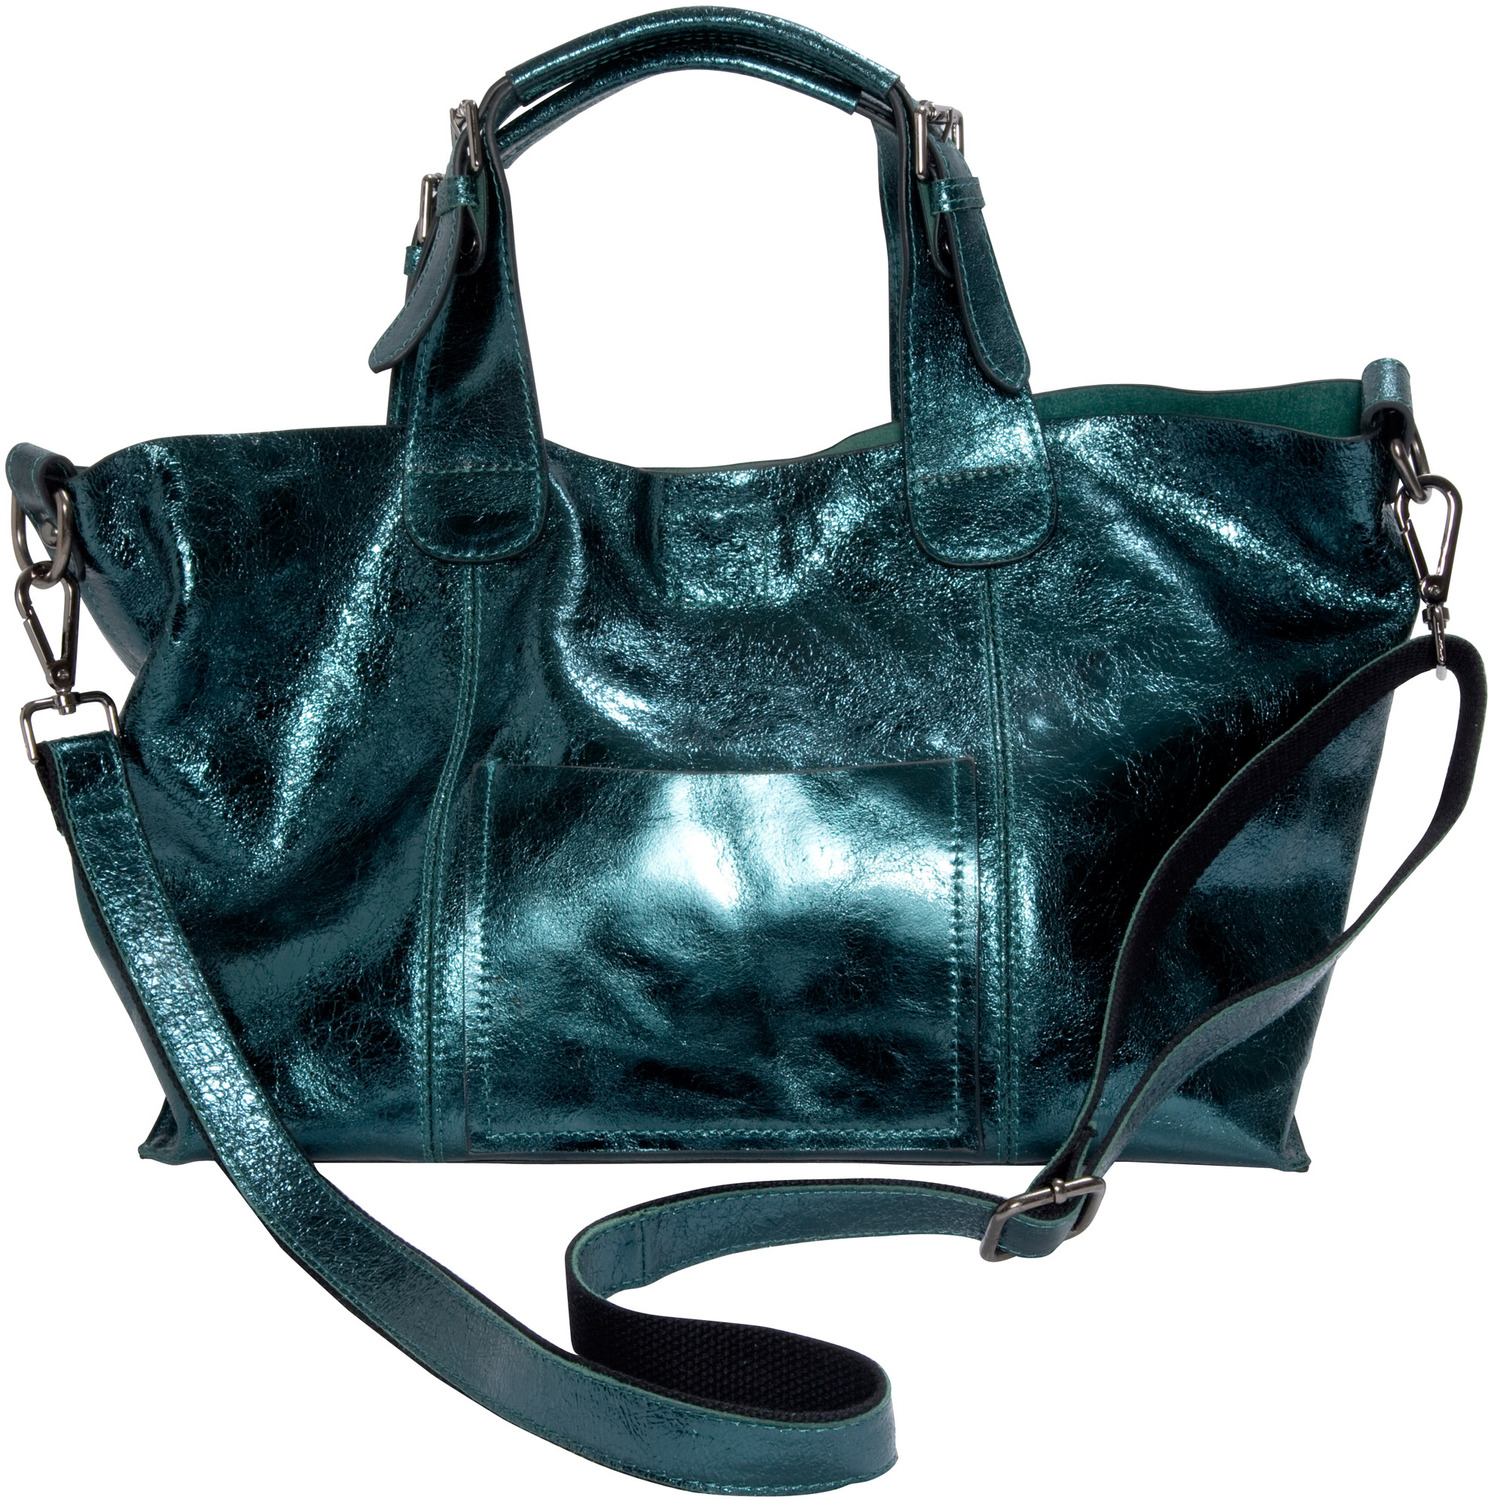 Anissa Dark Green by H2Z Metallic Leather Bag - Anissa Dark Green - 14" x 9.5" Metallic Leather Purse/Handbag